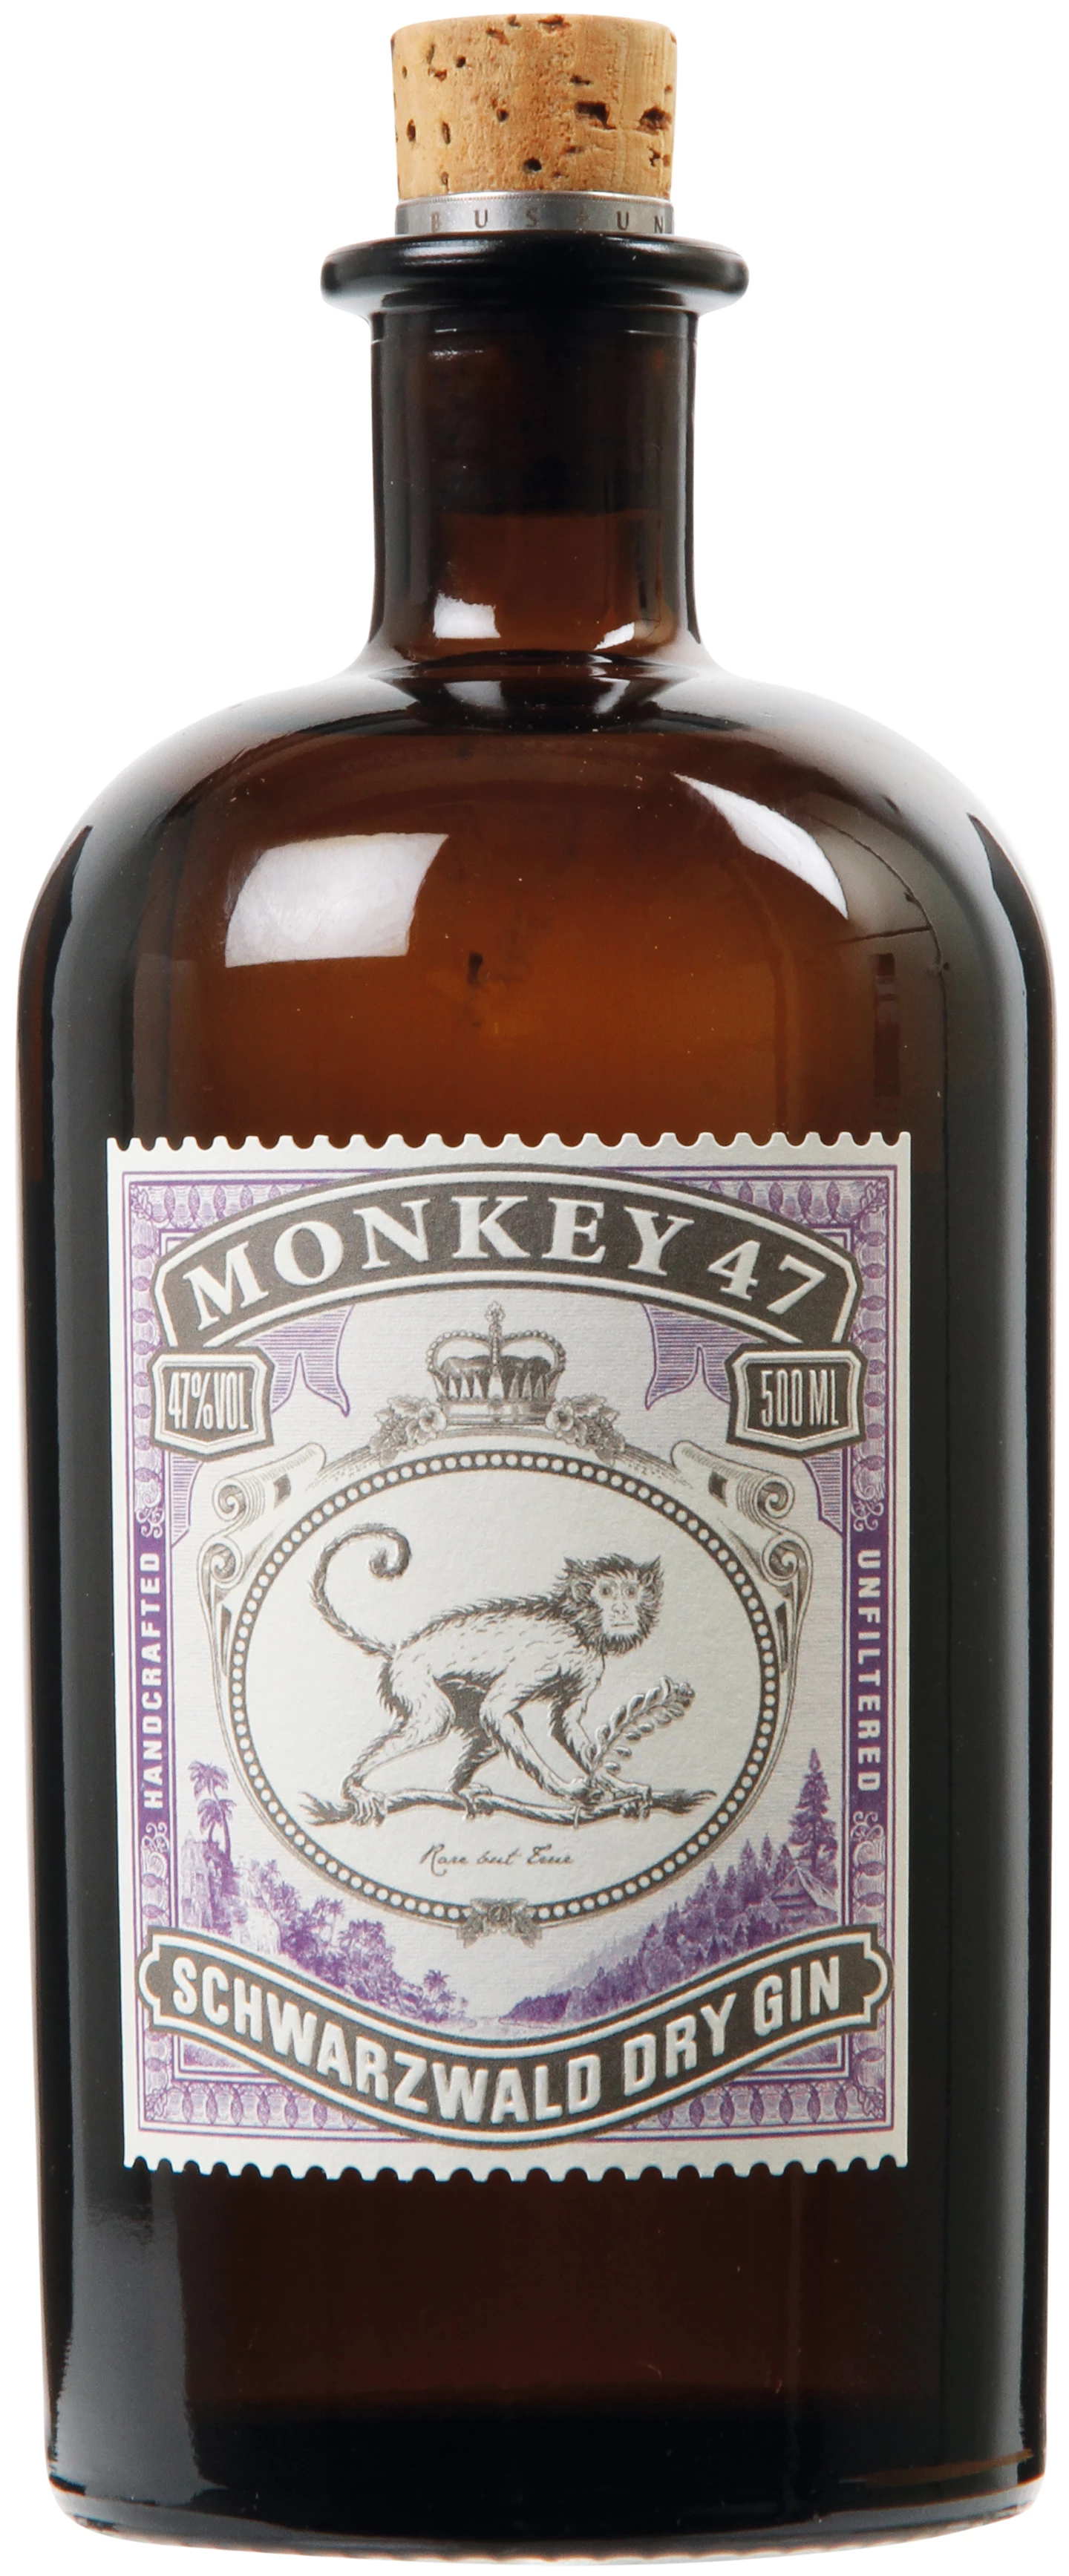 Løgismose Spiritus Schwarzwald Dry Gin Monkey 47 - 128473